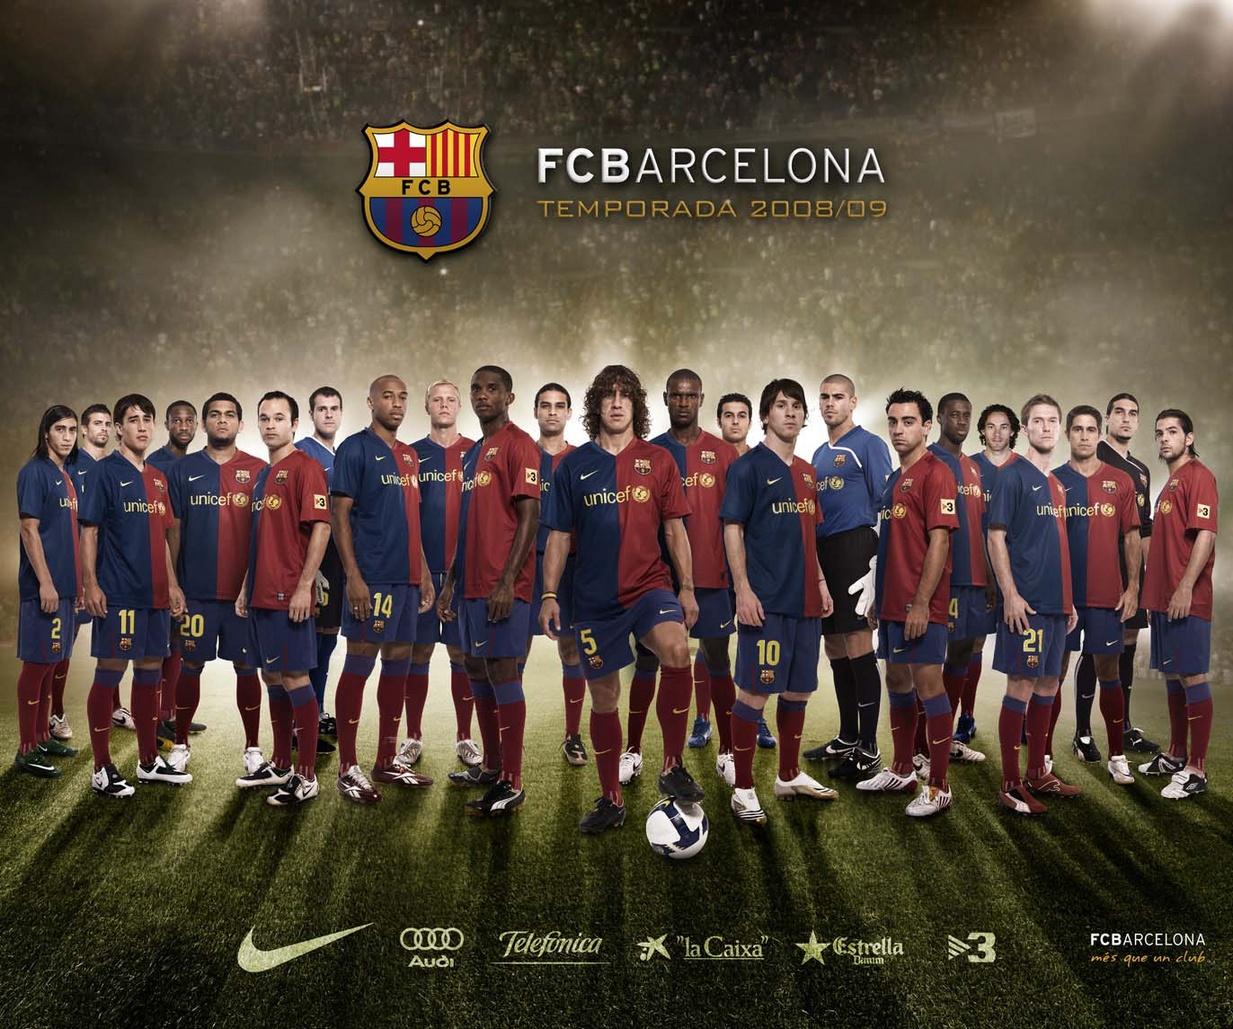 Wallpaper De Futbol - Group Photo Of Barcelona , HD Wallpaper & Backgrounds